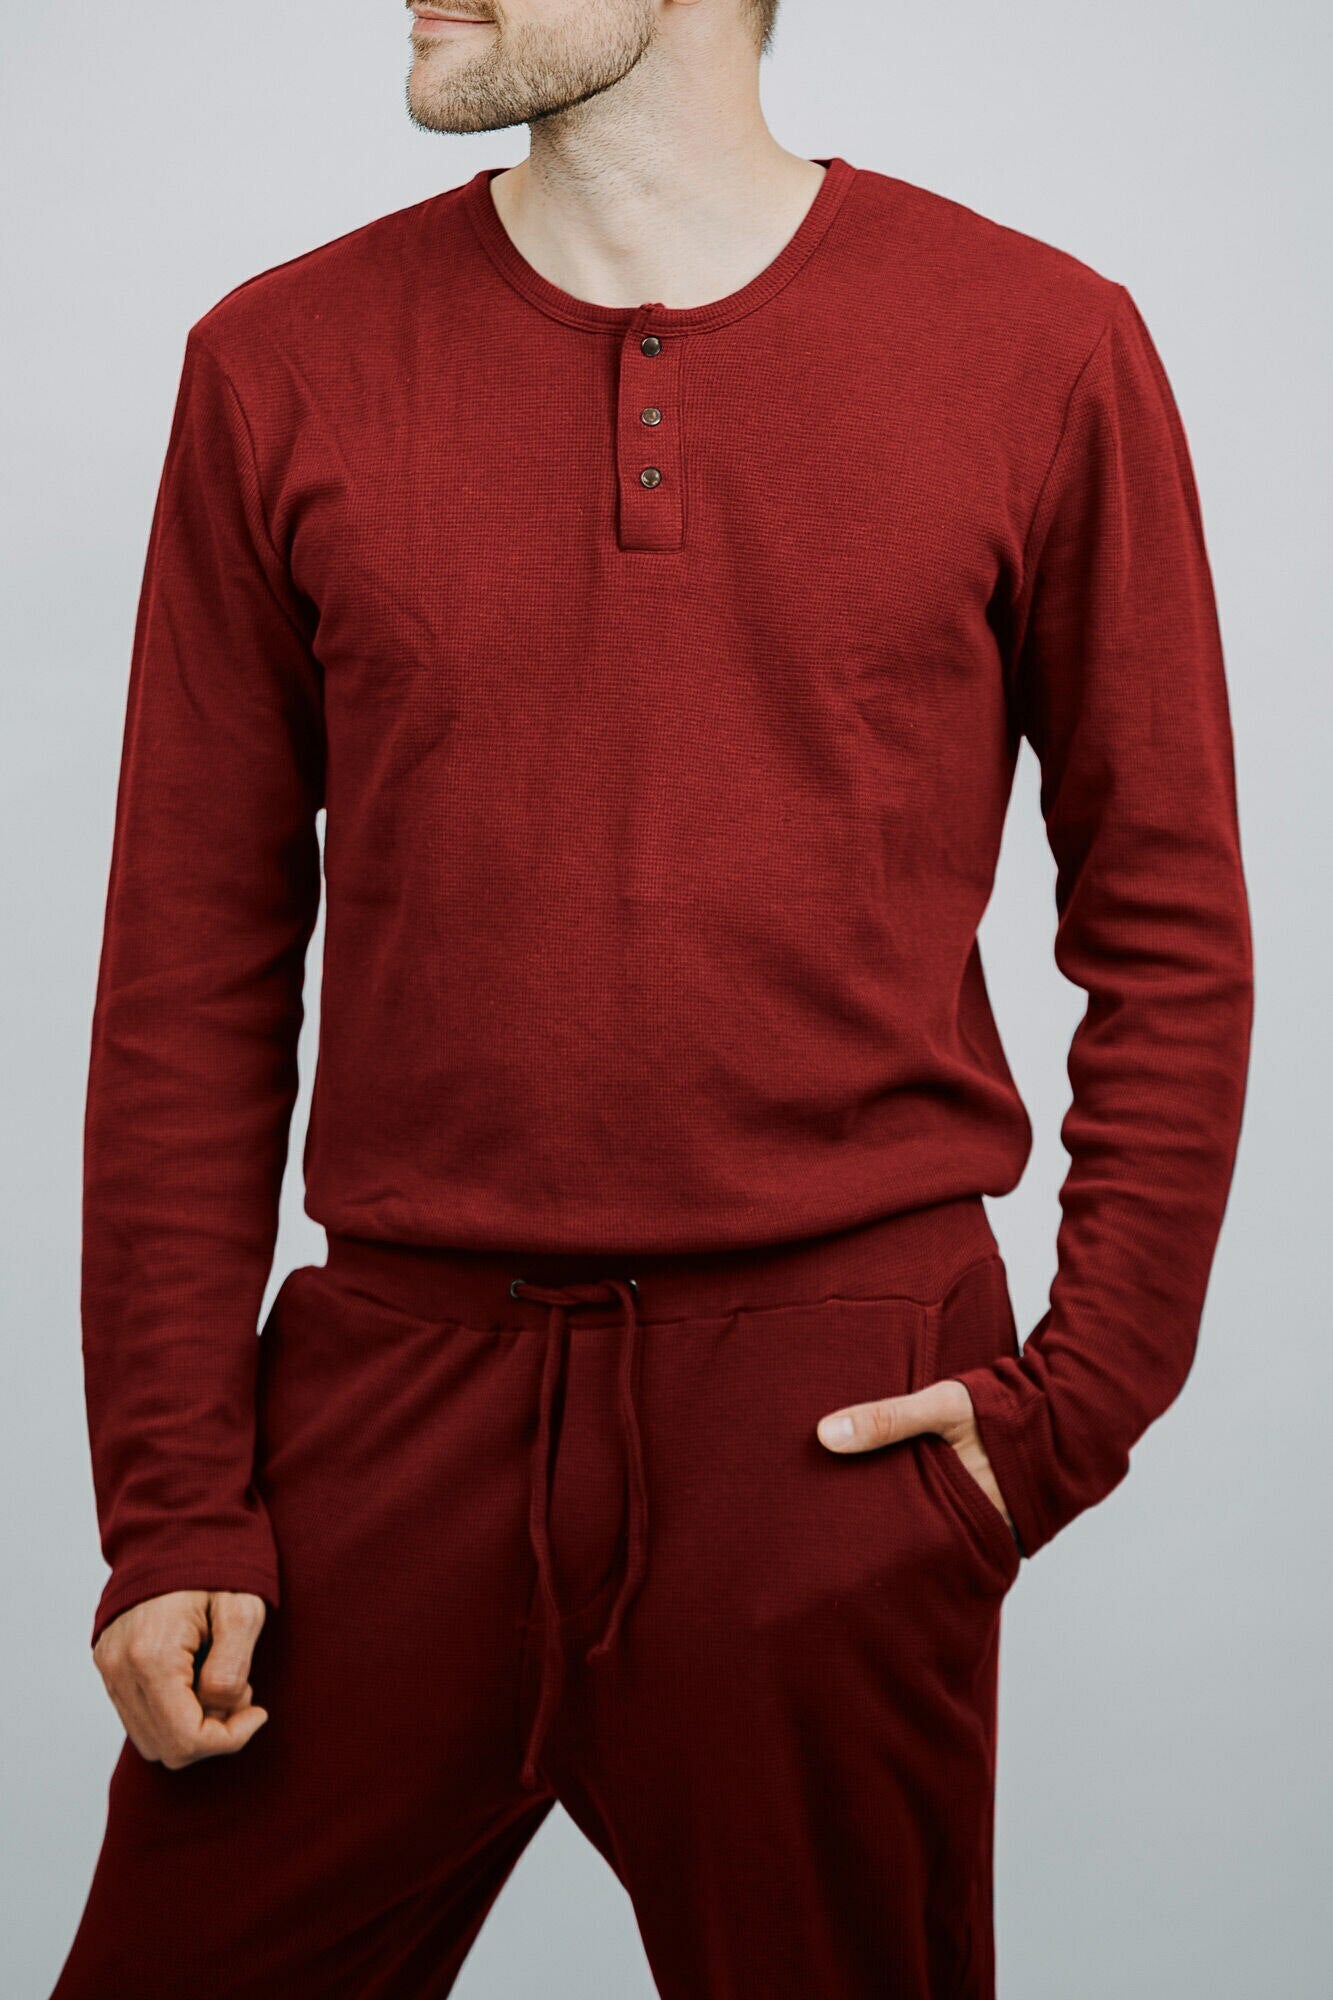 2 Piece Pajama Set (Men's) - Organic Thermal (Crimson)